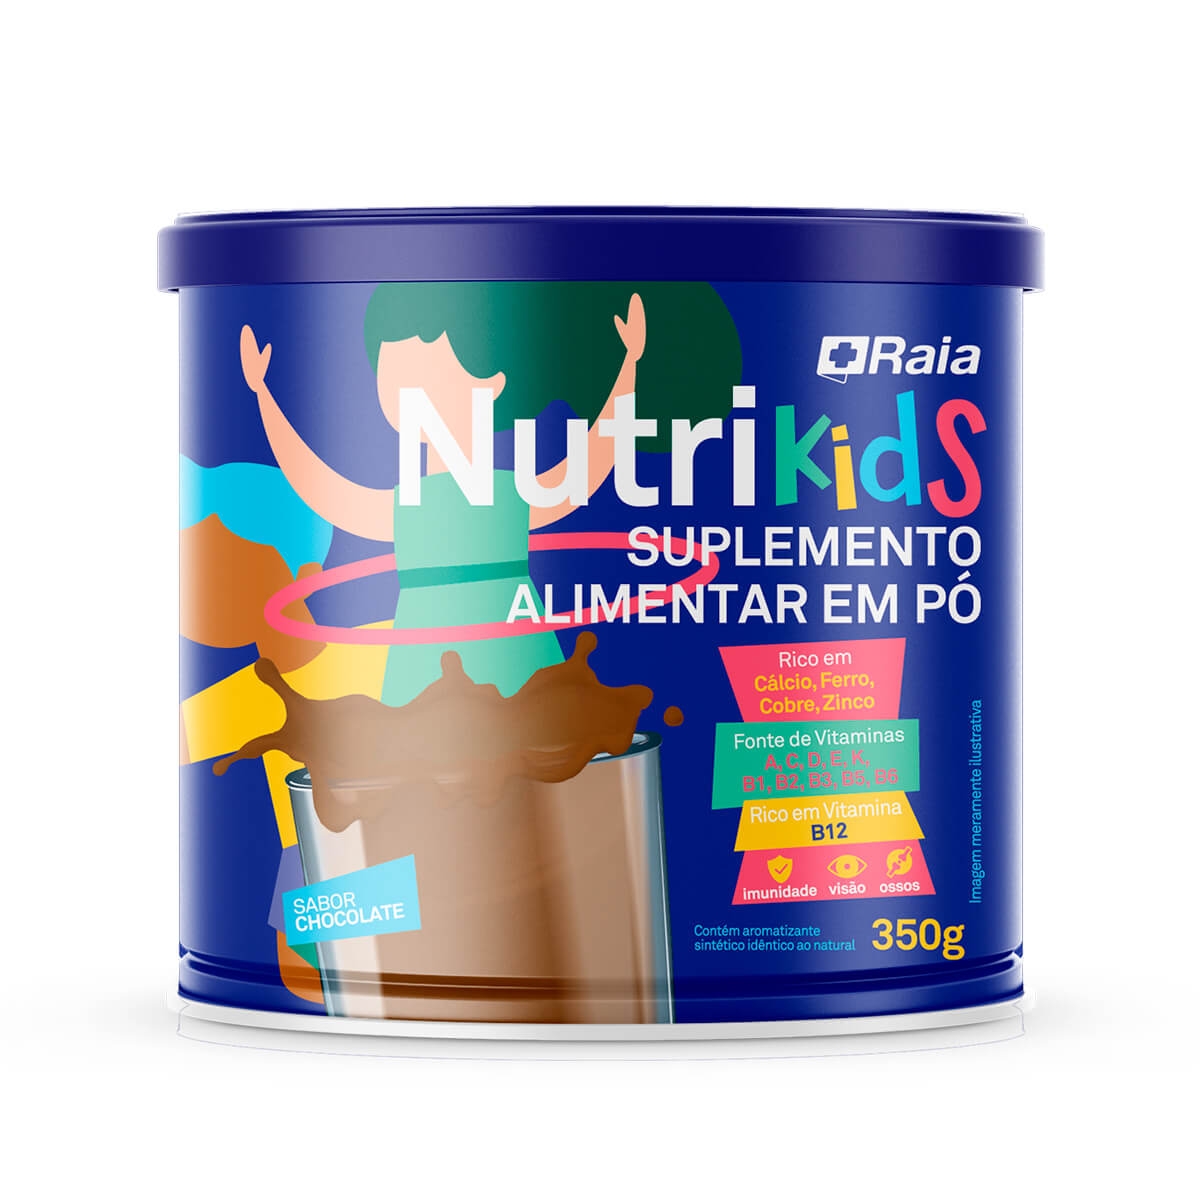 Suplemento Alimentar Raia Nutri Kids Sabor Chocolate com 350g 350g